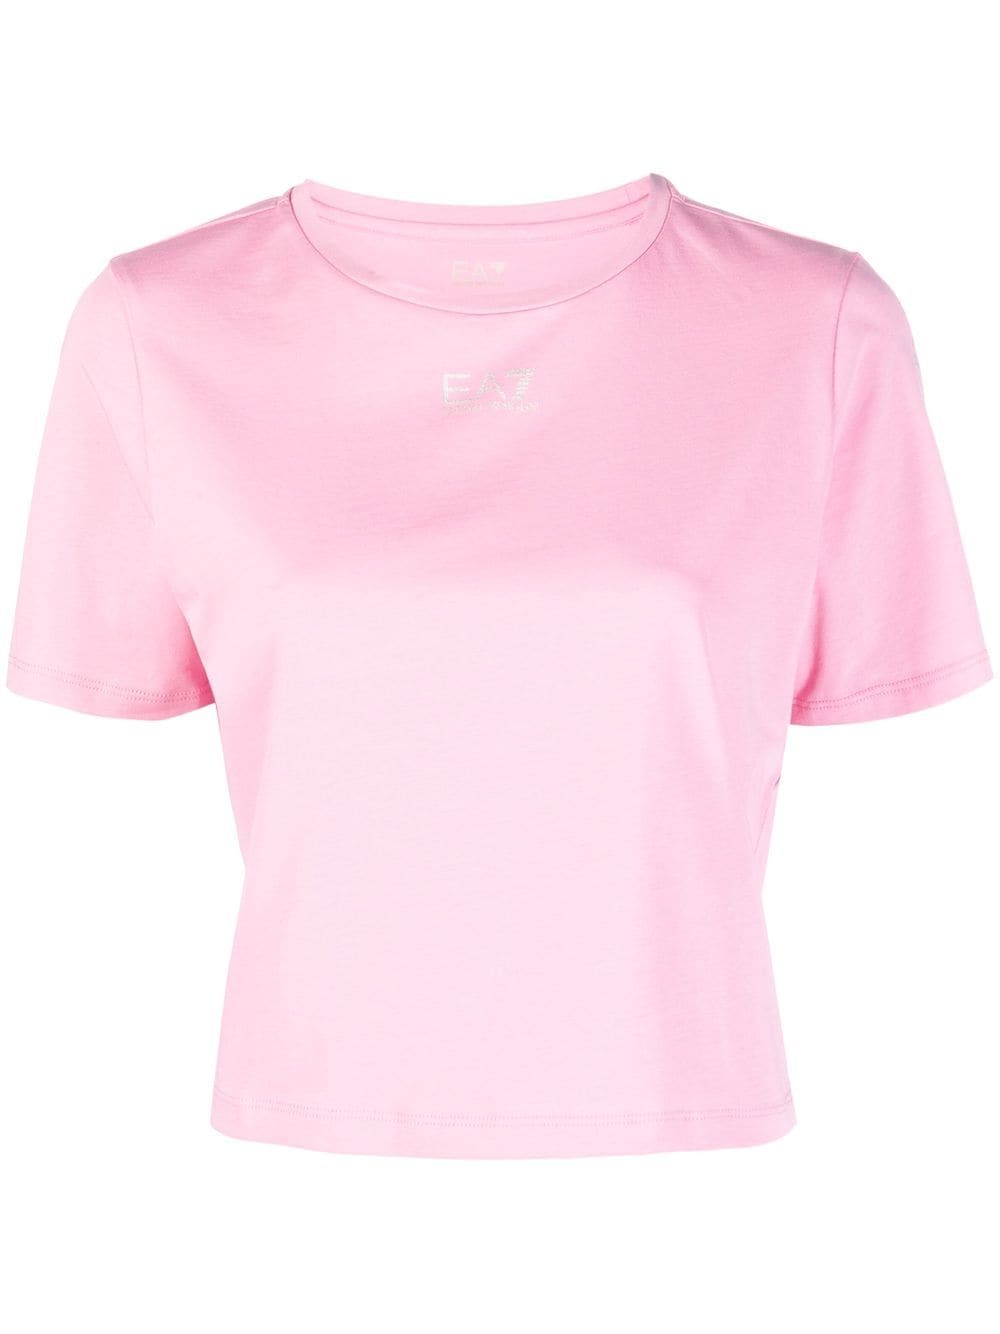 Ea7 Emporio Armani logo-print cropped T-shirt - Pink von Ea7 Emporio Armani